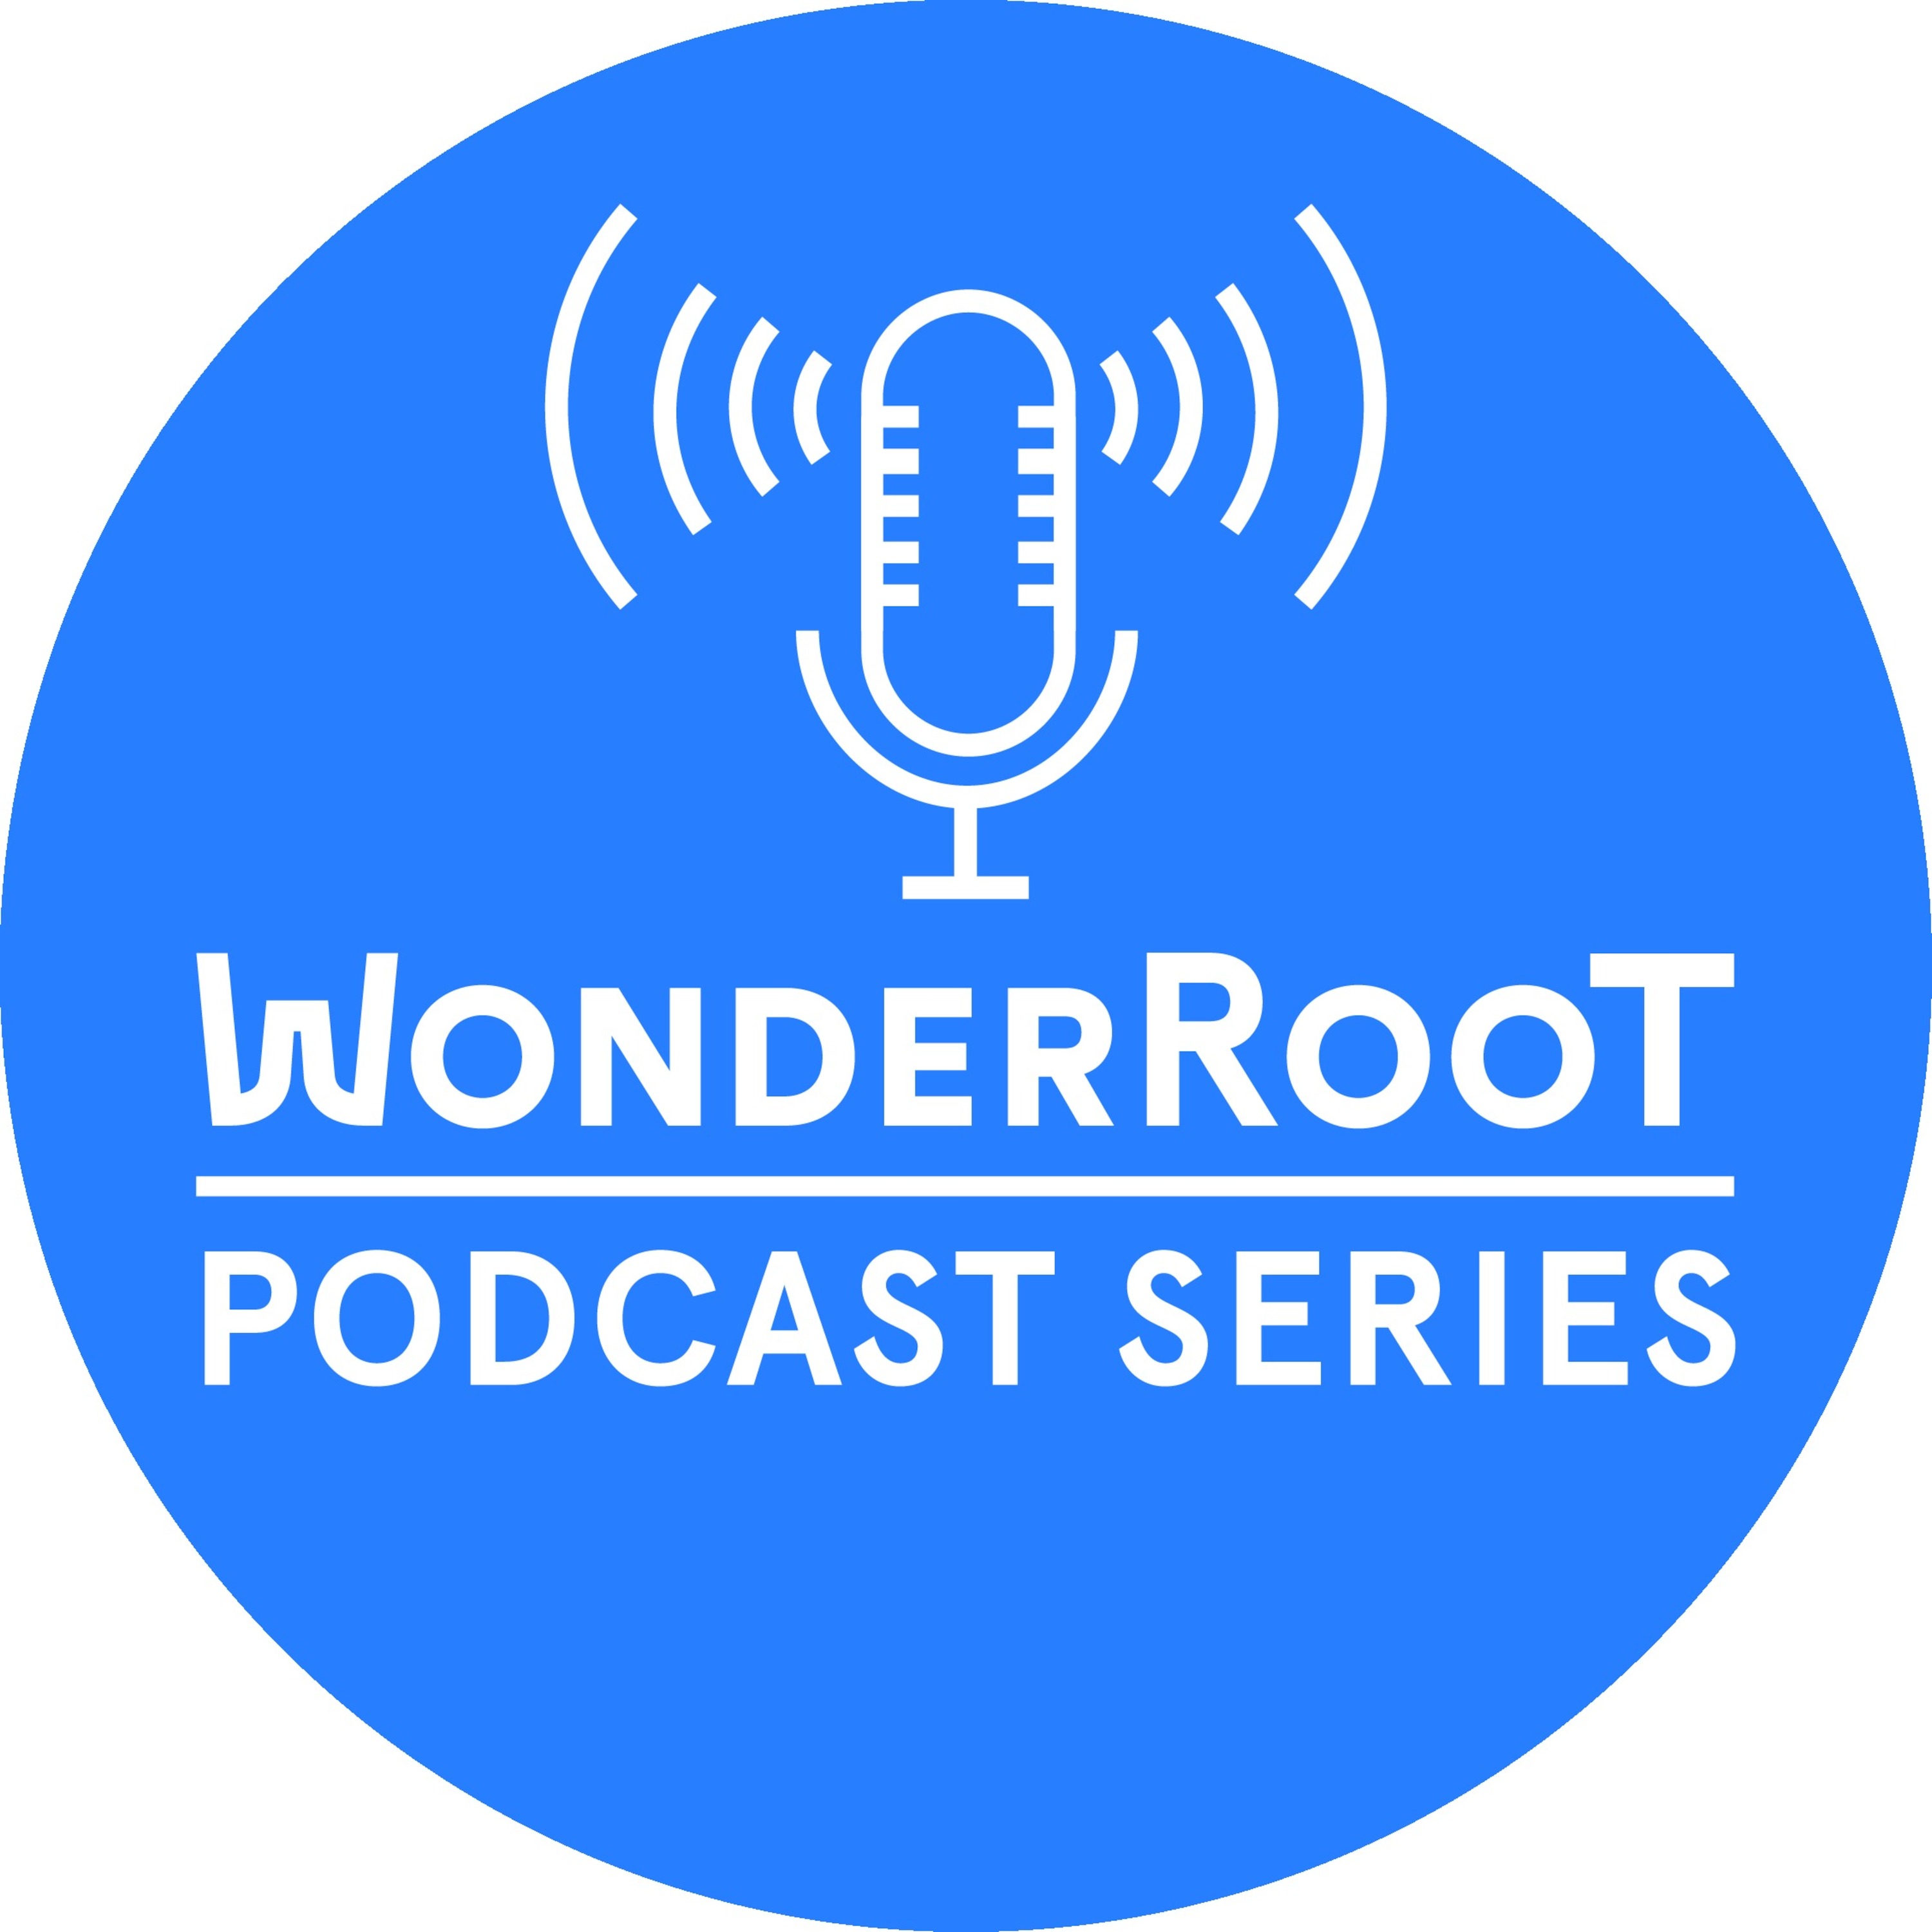 The WonderRoot Podcast Series